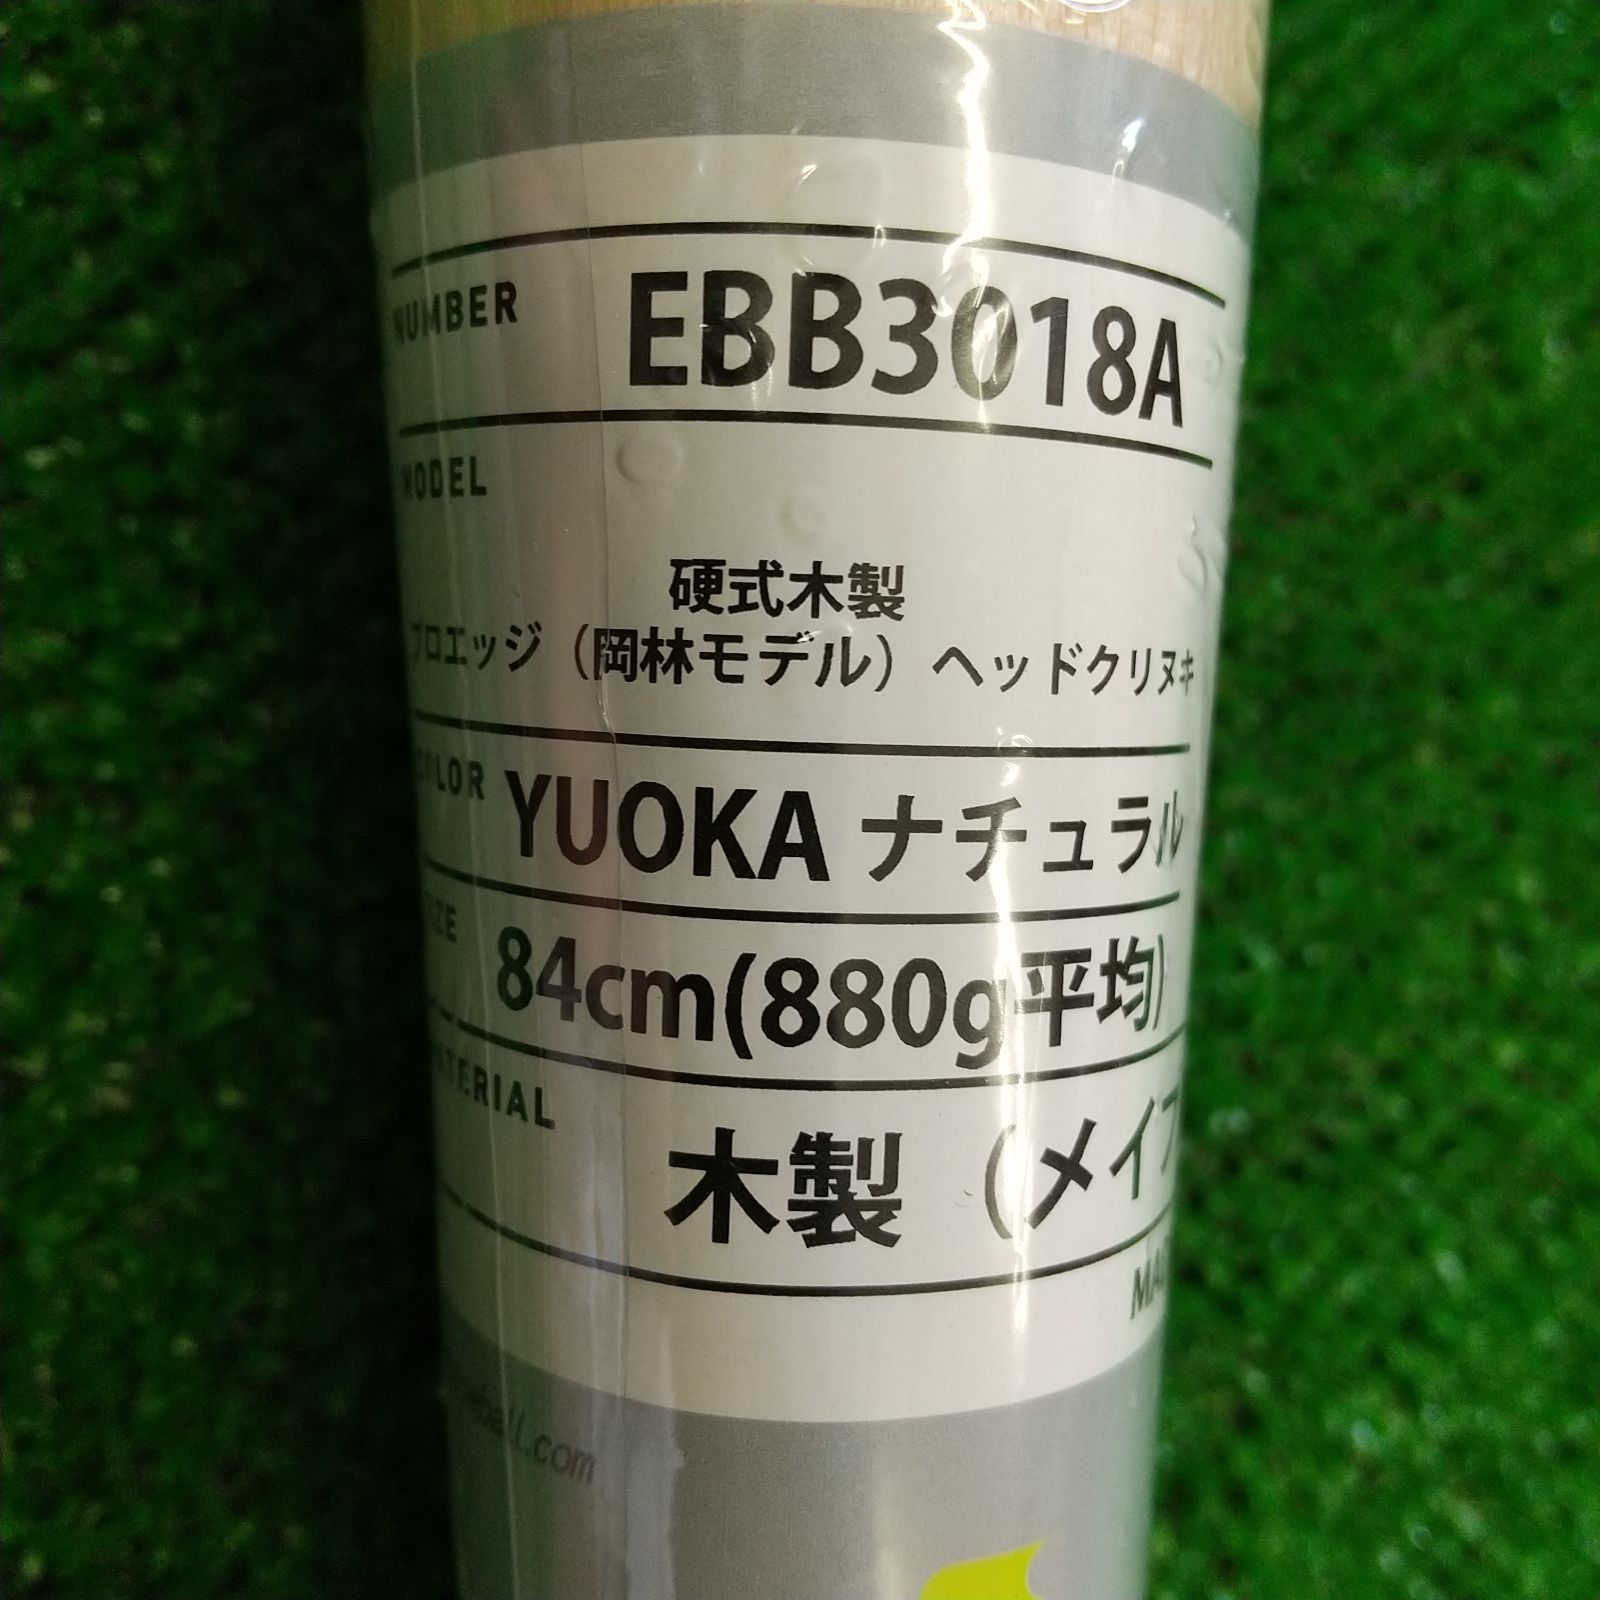 SSK 硬式用木製バット 中日 岡林モデル 84cm890g メイプル EBB3018A 